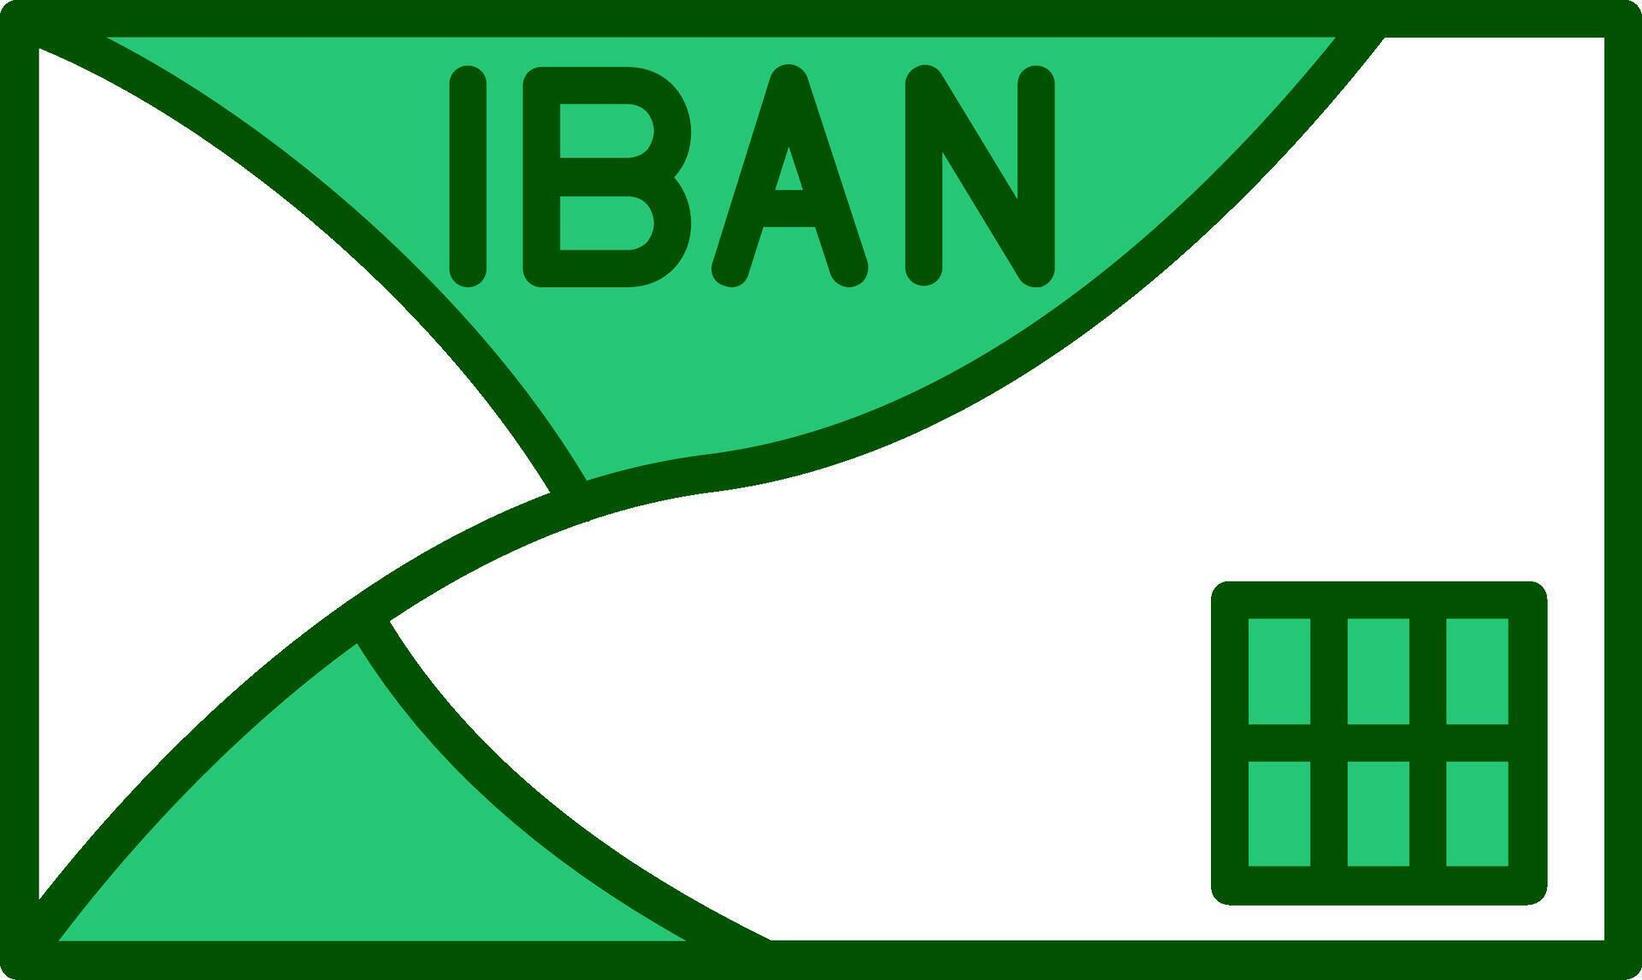 Iban Vector Icon